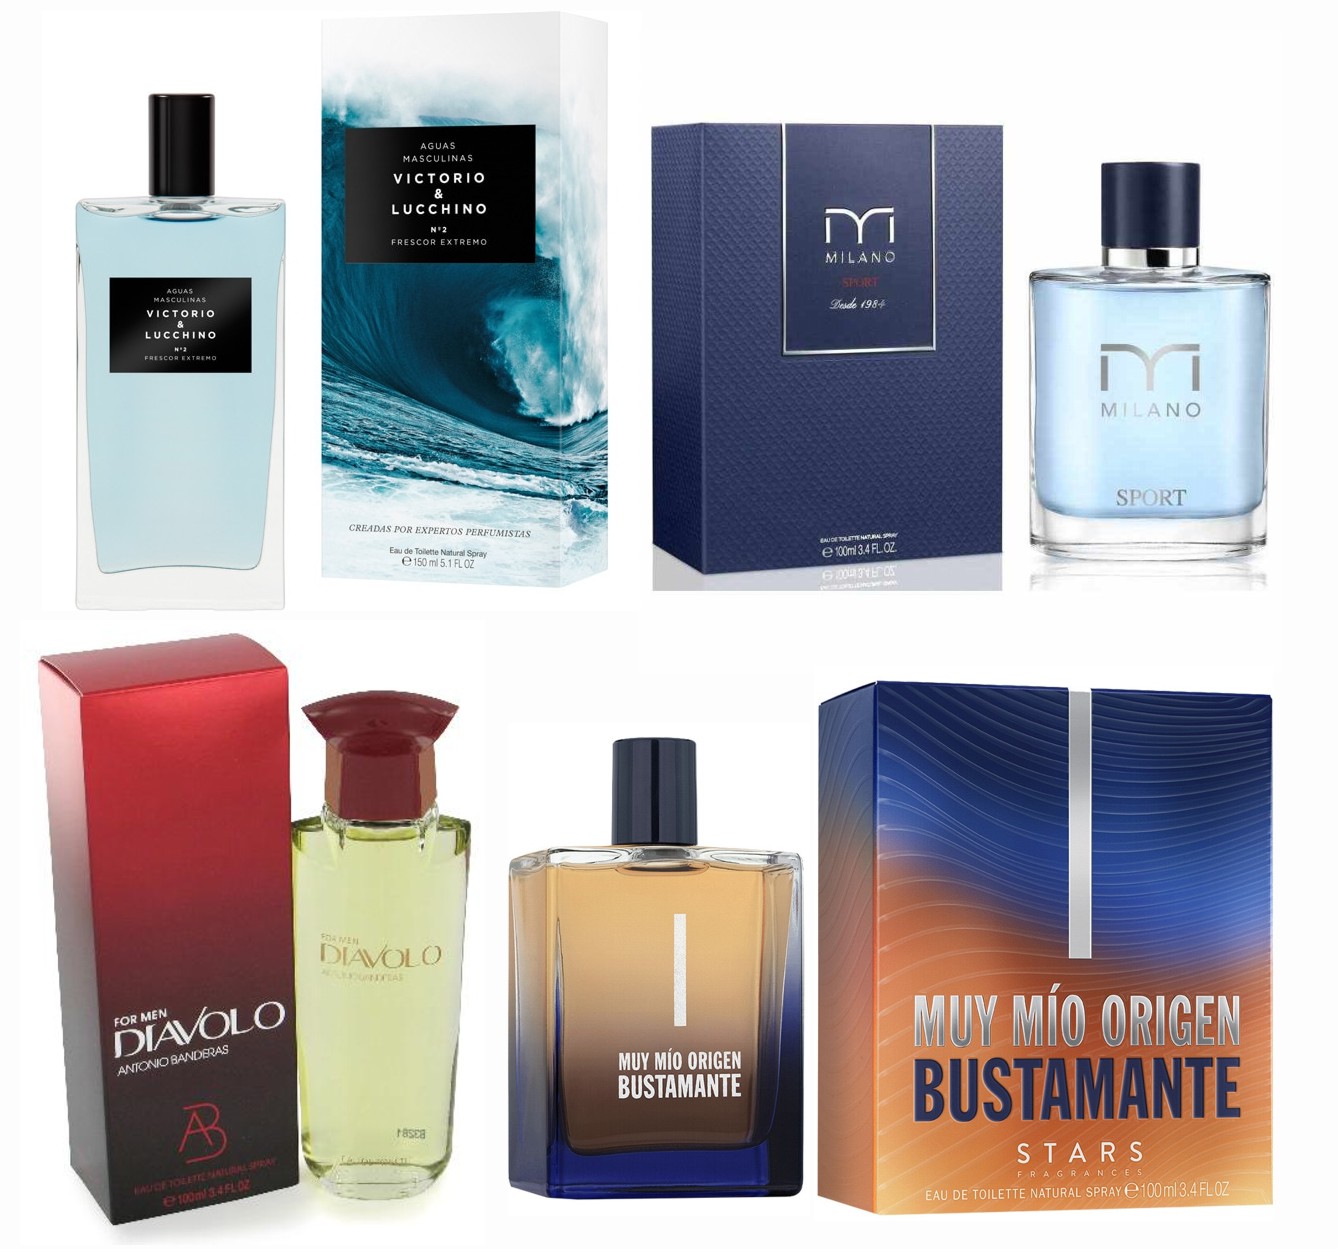 Secretodigital.com los perfumes mas baratos de Internet, compra